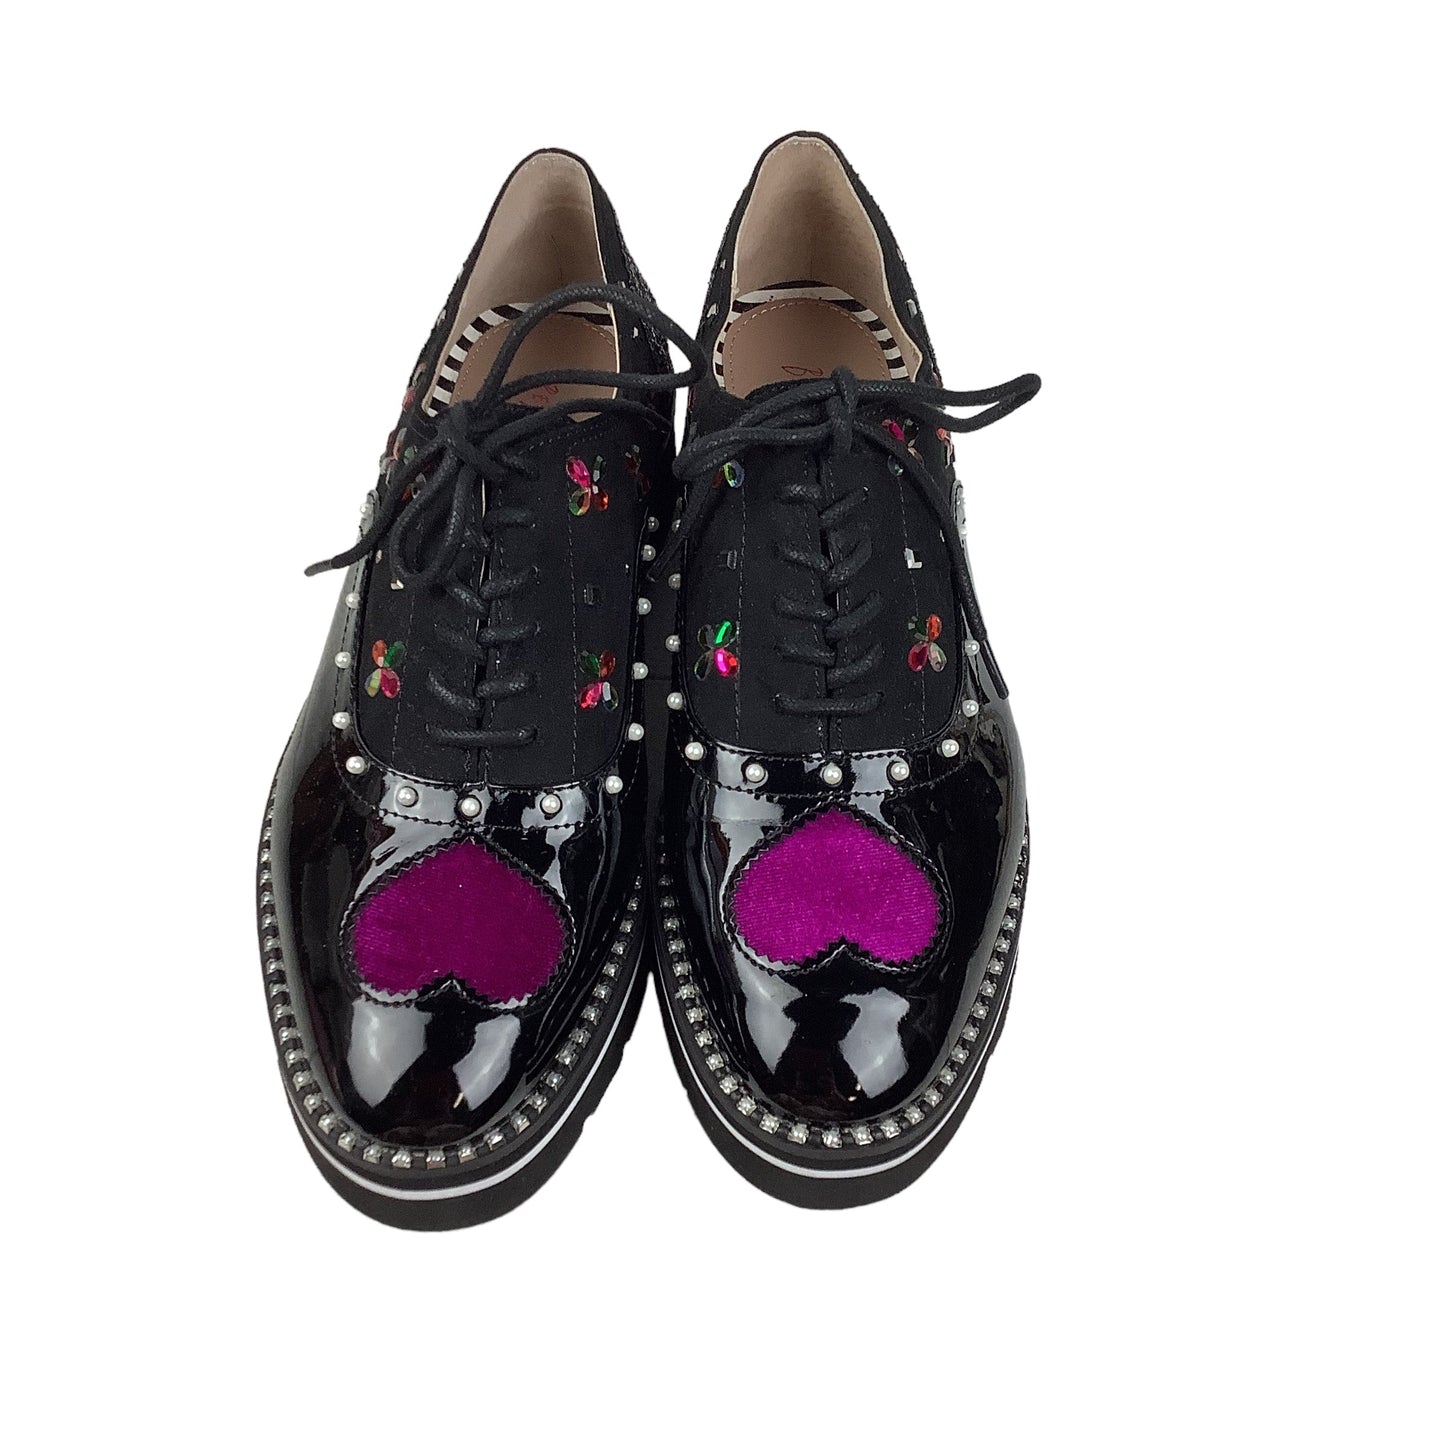 Black Shoes Flats Betsey Johnson, Size 7.5